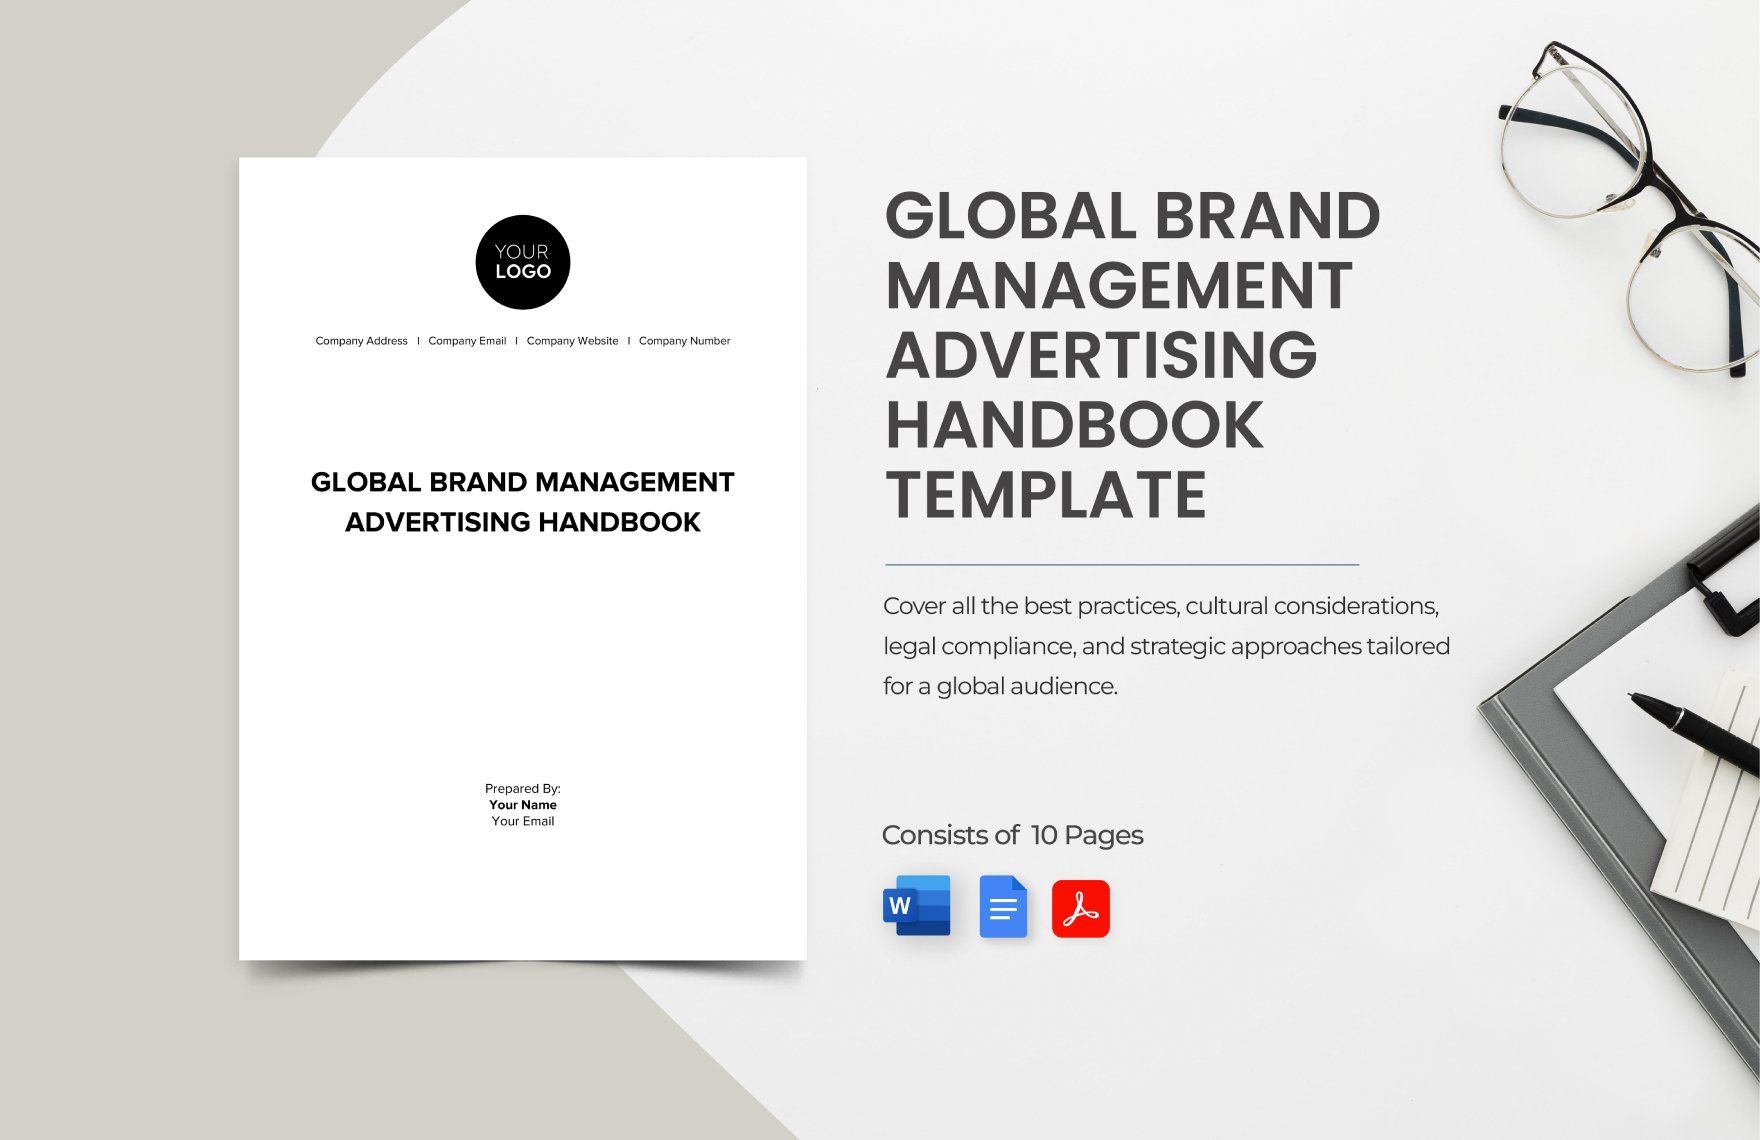 Global Brand Management Advertising Handbook Template